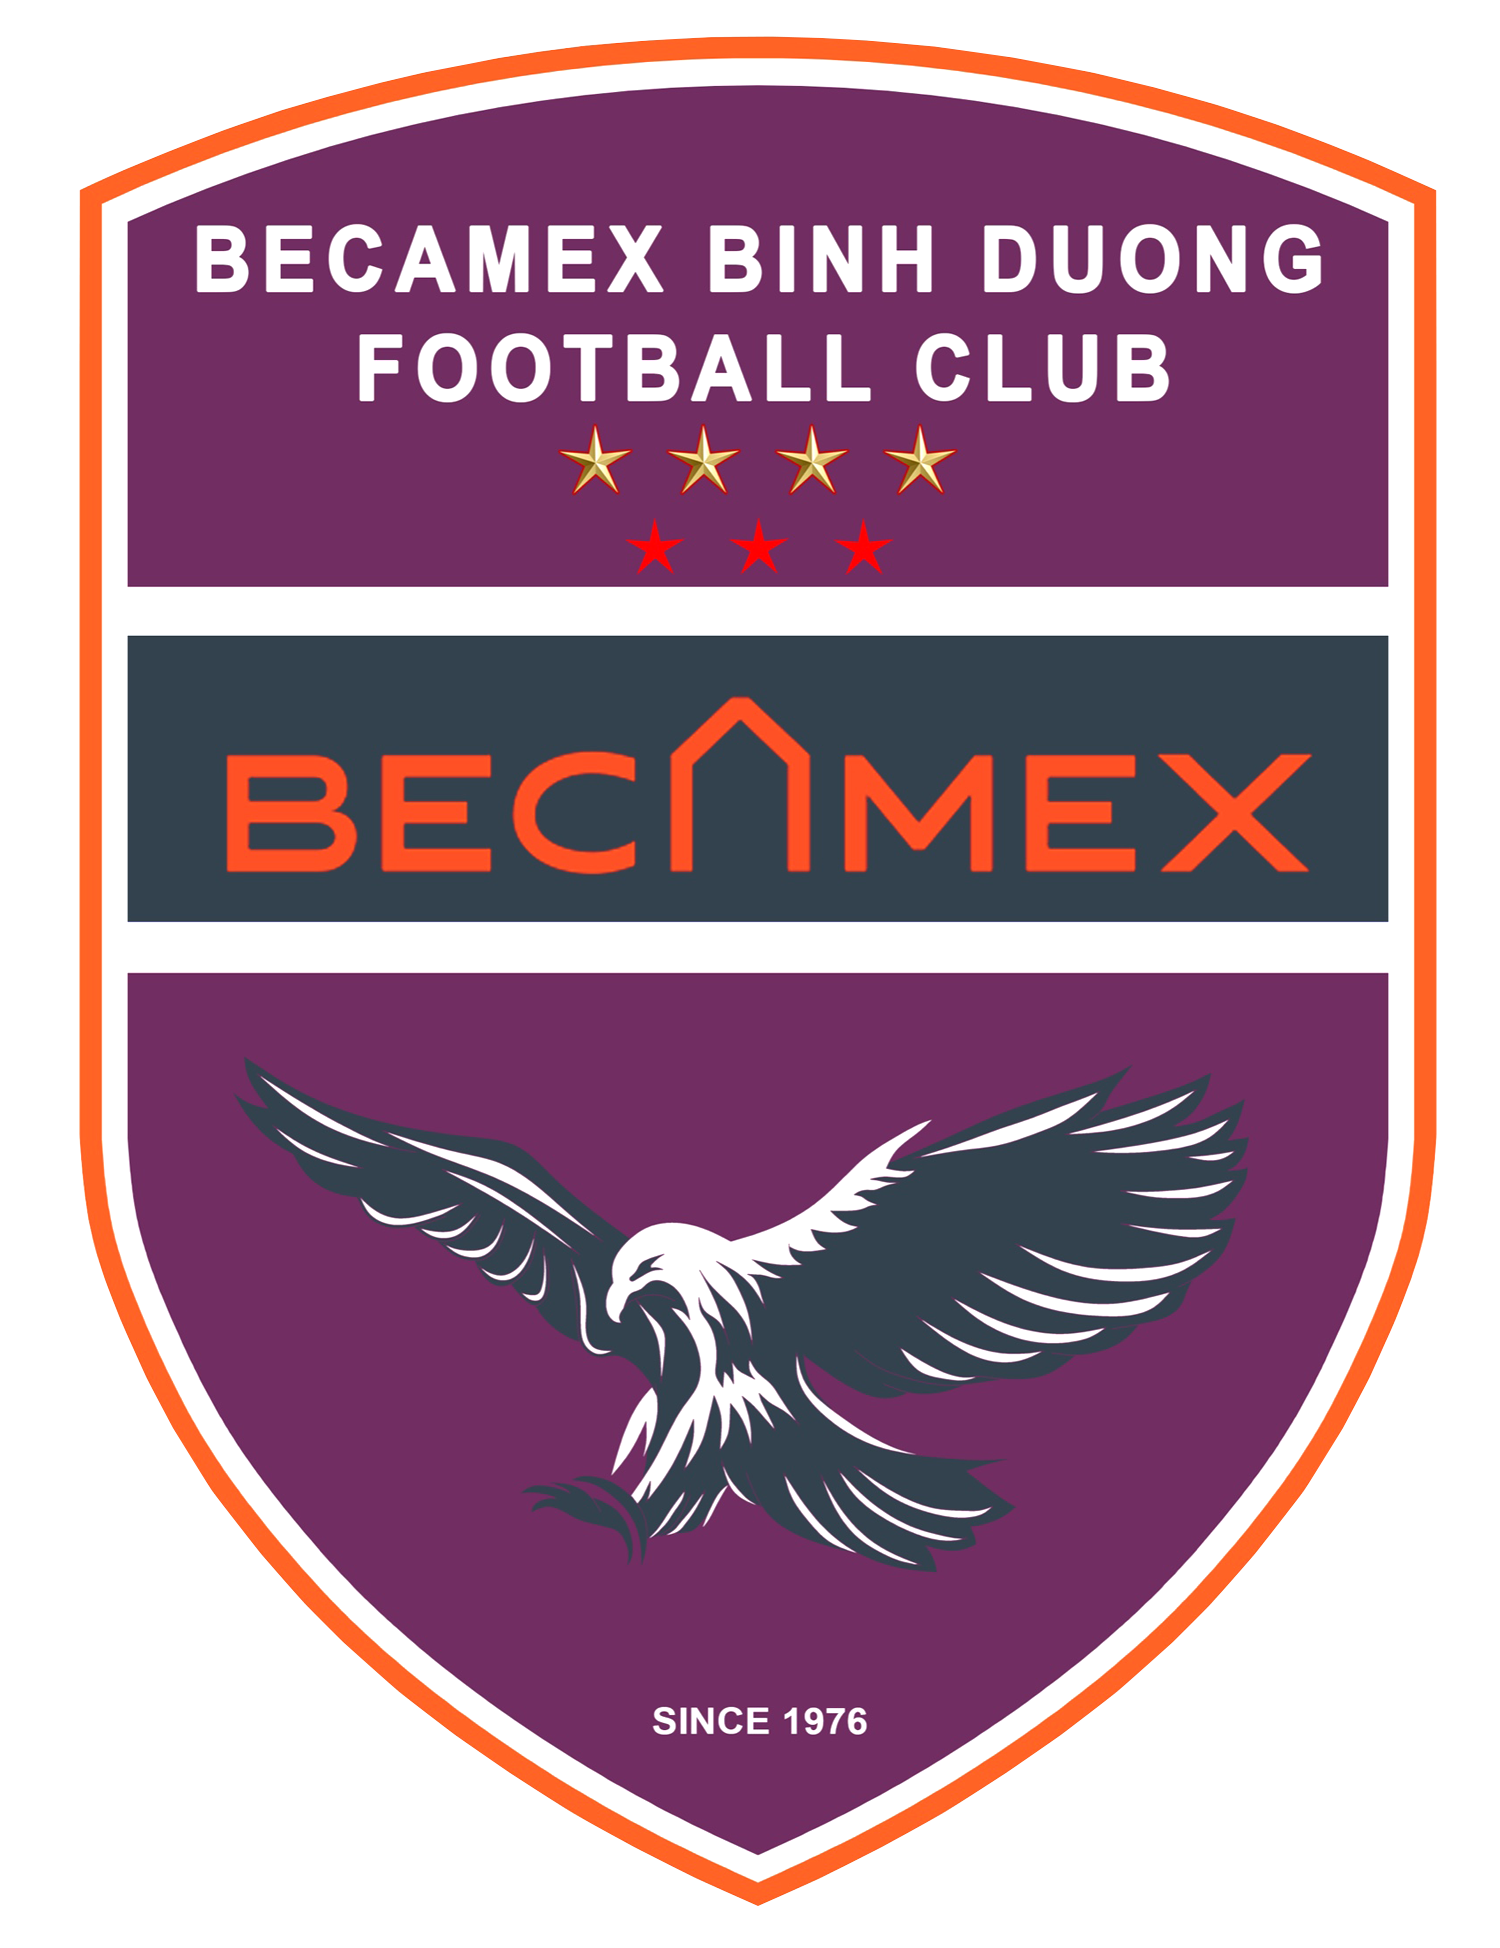 BECAMEX BINH DUONG FOOTBALL CLUB